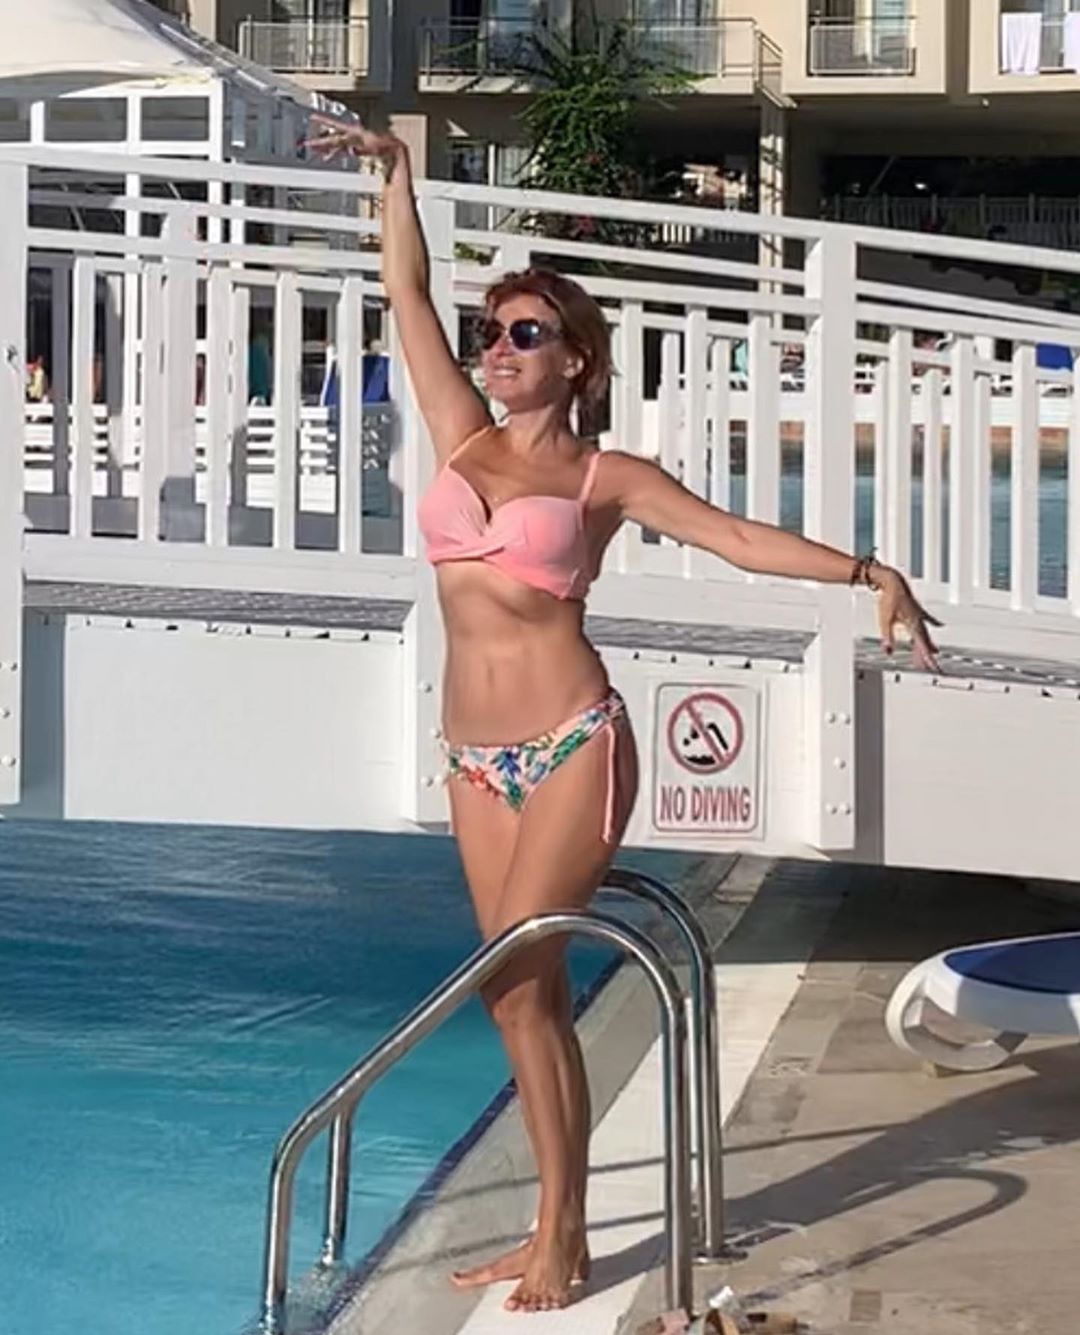 Natalia Shturm - Просто прикалываюсь)). Реально, сегодня в воде теплее, чем на воздухе!😄 #яПтиса #moodgood #swimmingpool #hotel #bodrum #бодрум2020 #сентябрь2020